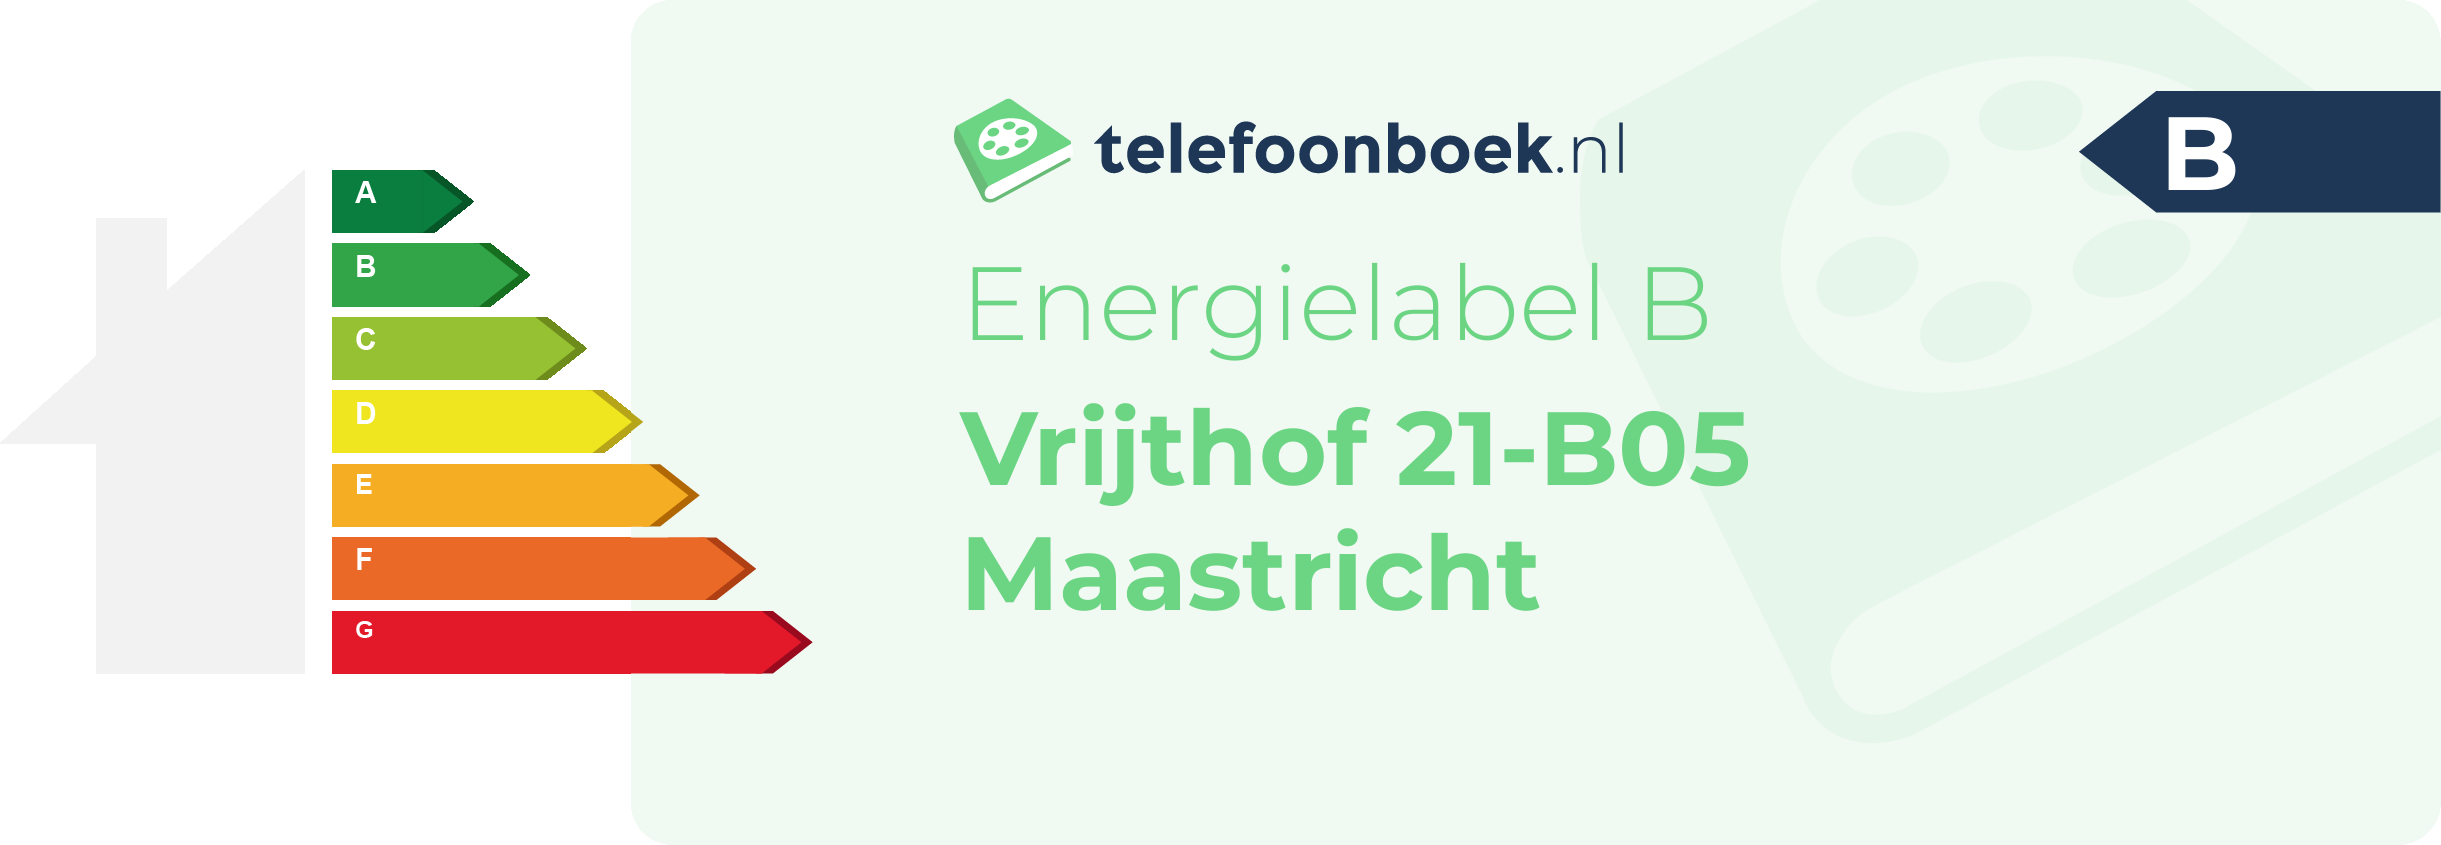 Energielabel Vrijthof 21-B05 Maastricht